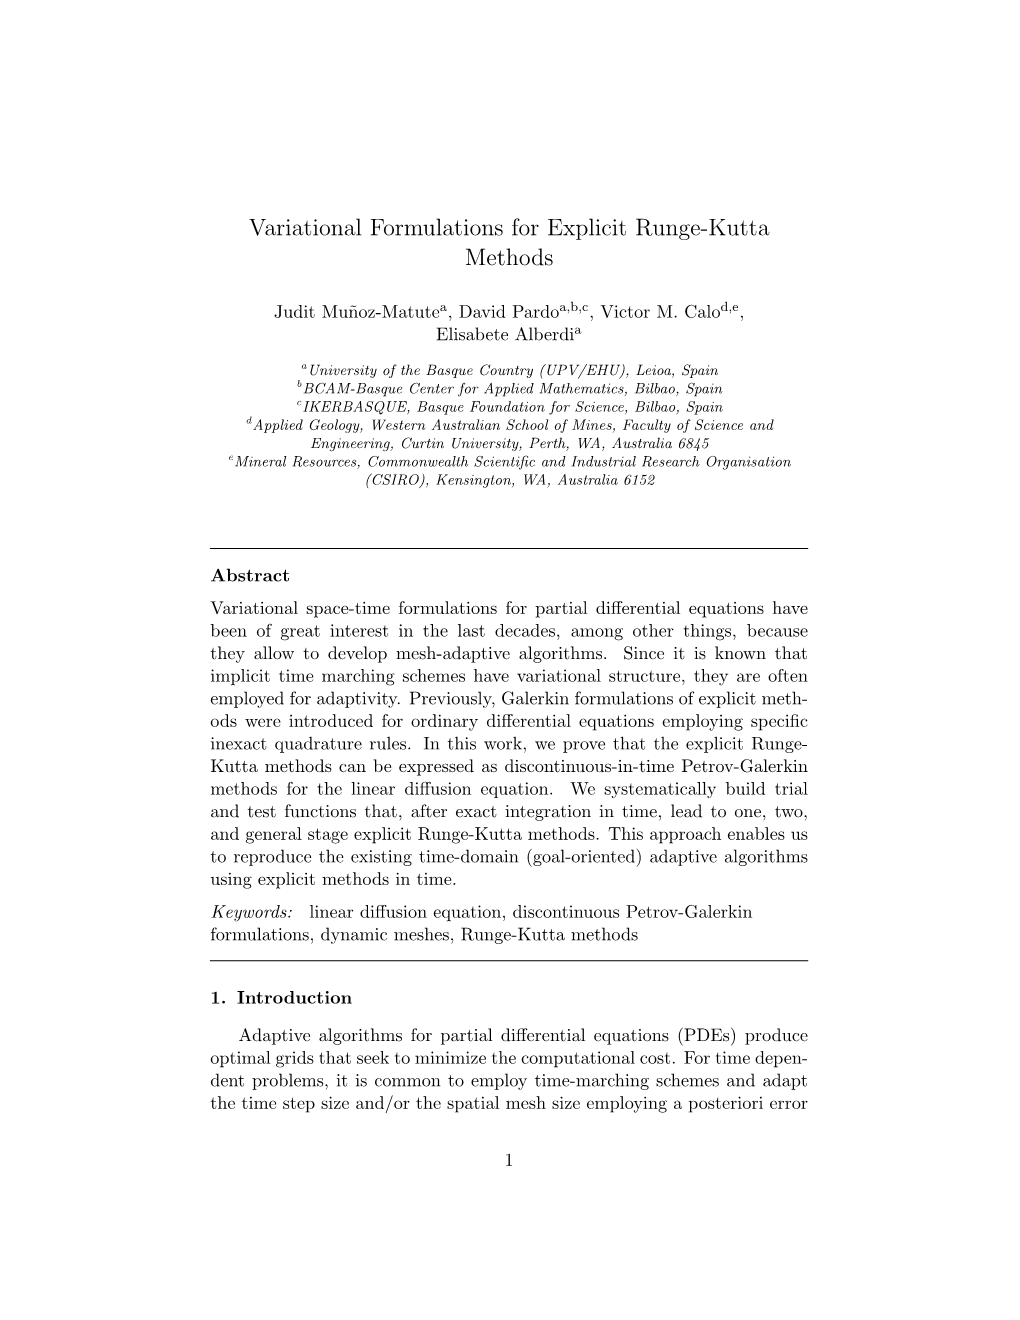 Variational Formulations for Explicit Runge-Kutta Methods